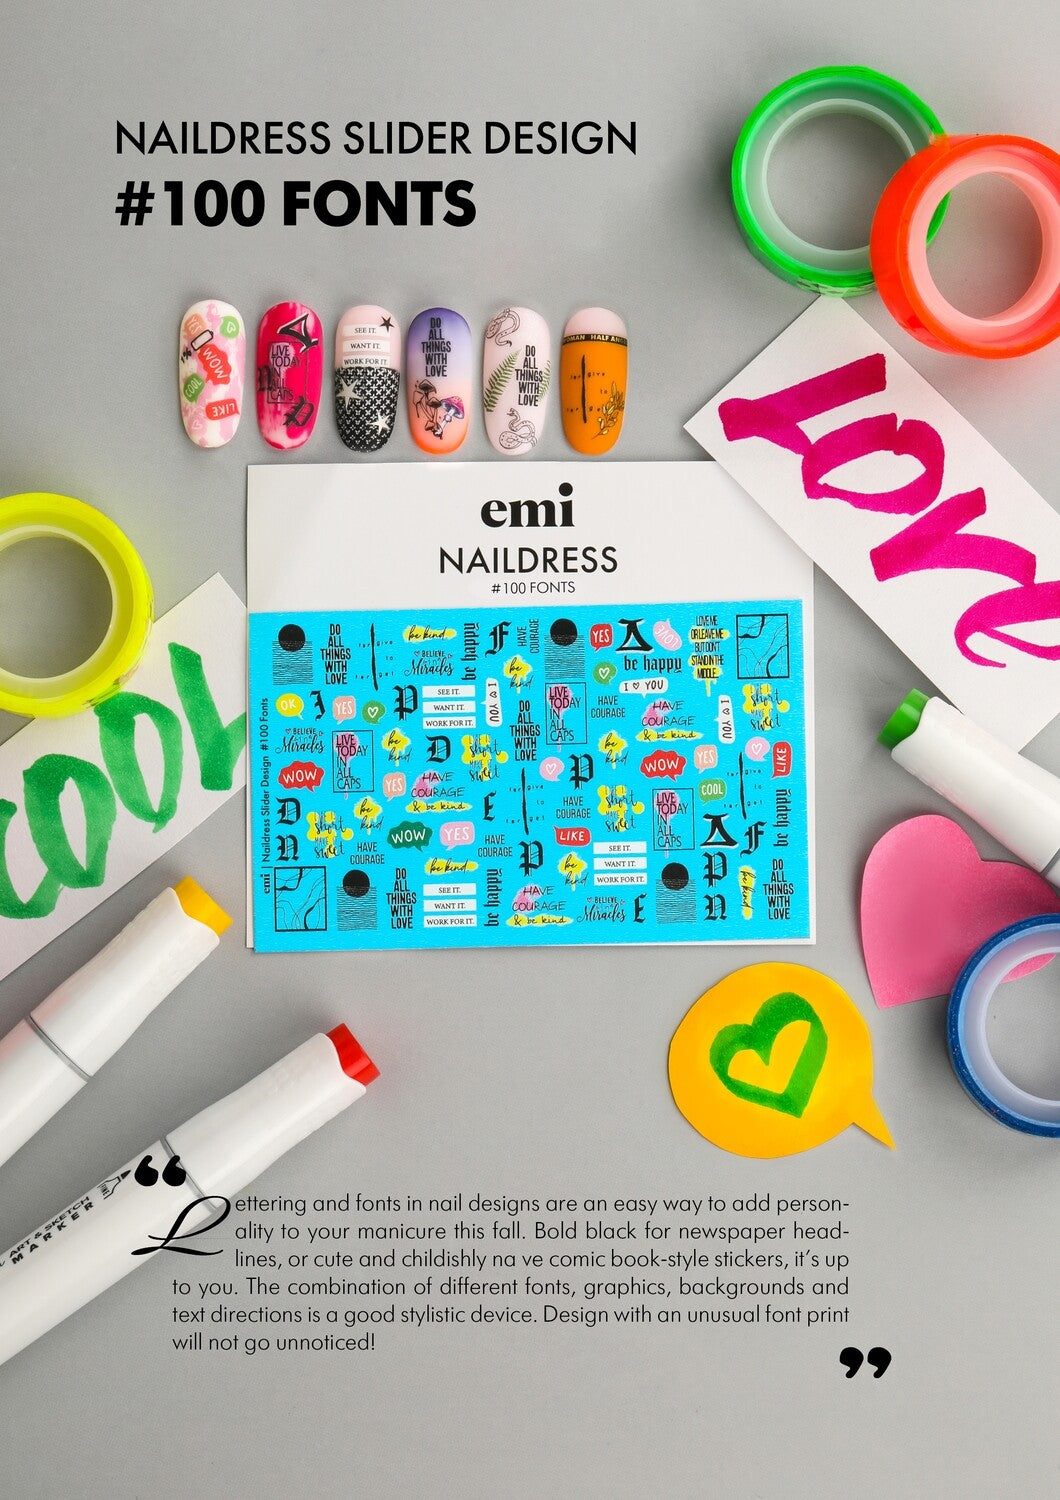 Naildress Slider Design #100 Fonts